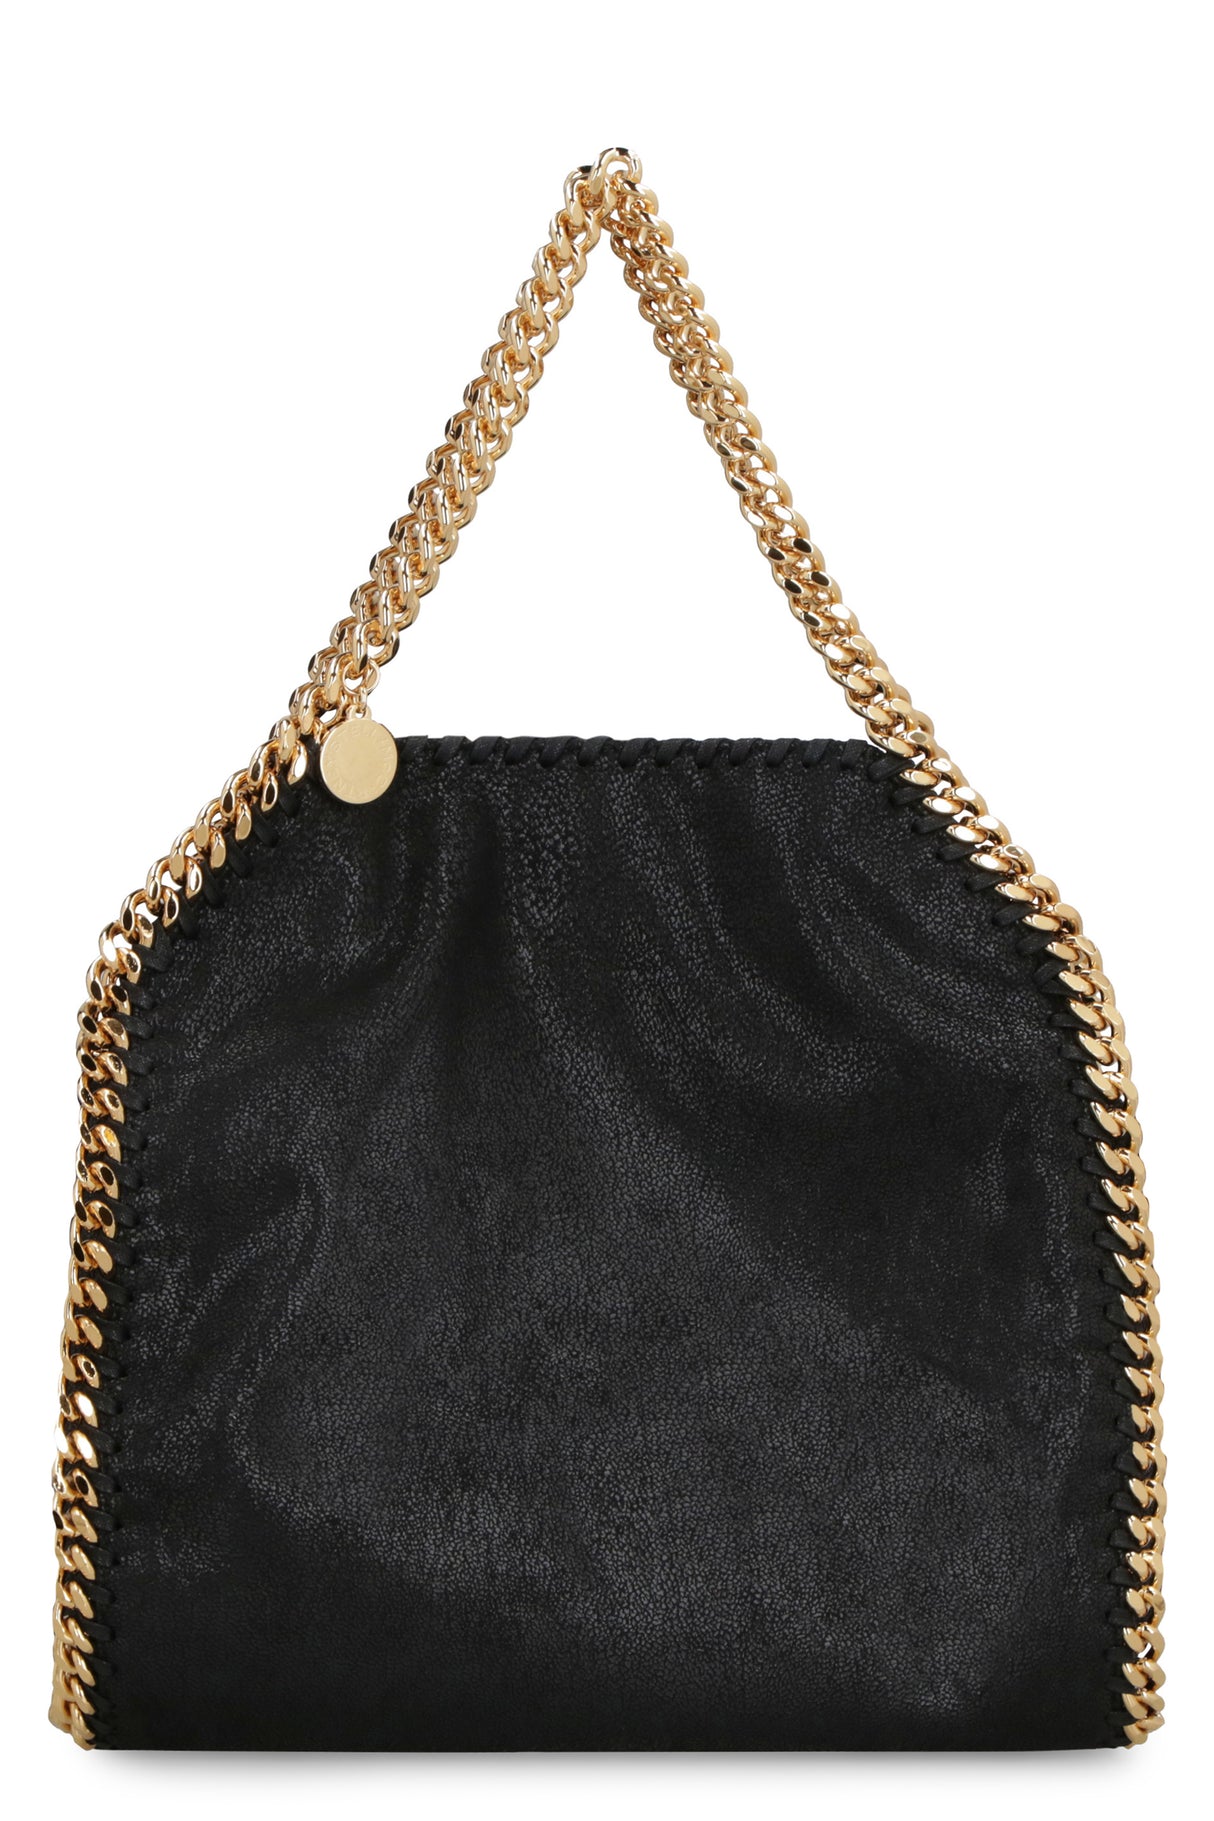 Mini Tote Handbag by Stella McCartney - Black